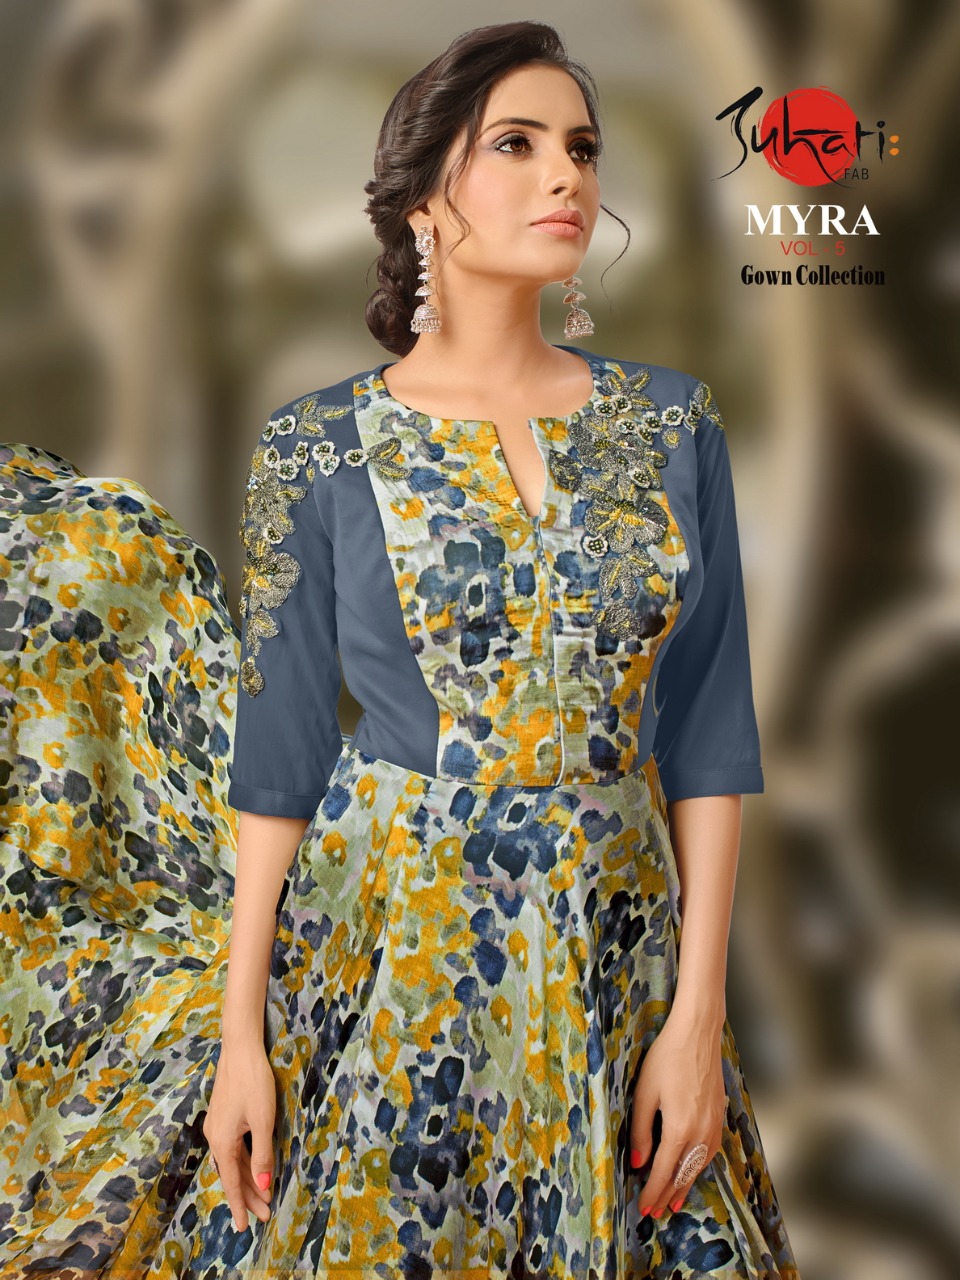 Subaru fab Myra vol 5 gown catalogue from Surat supplier